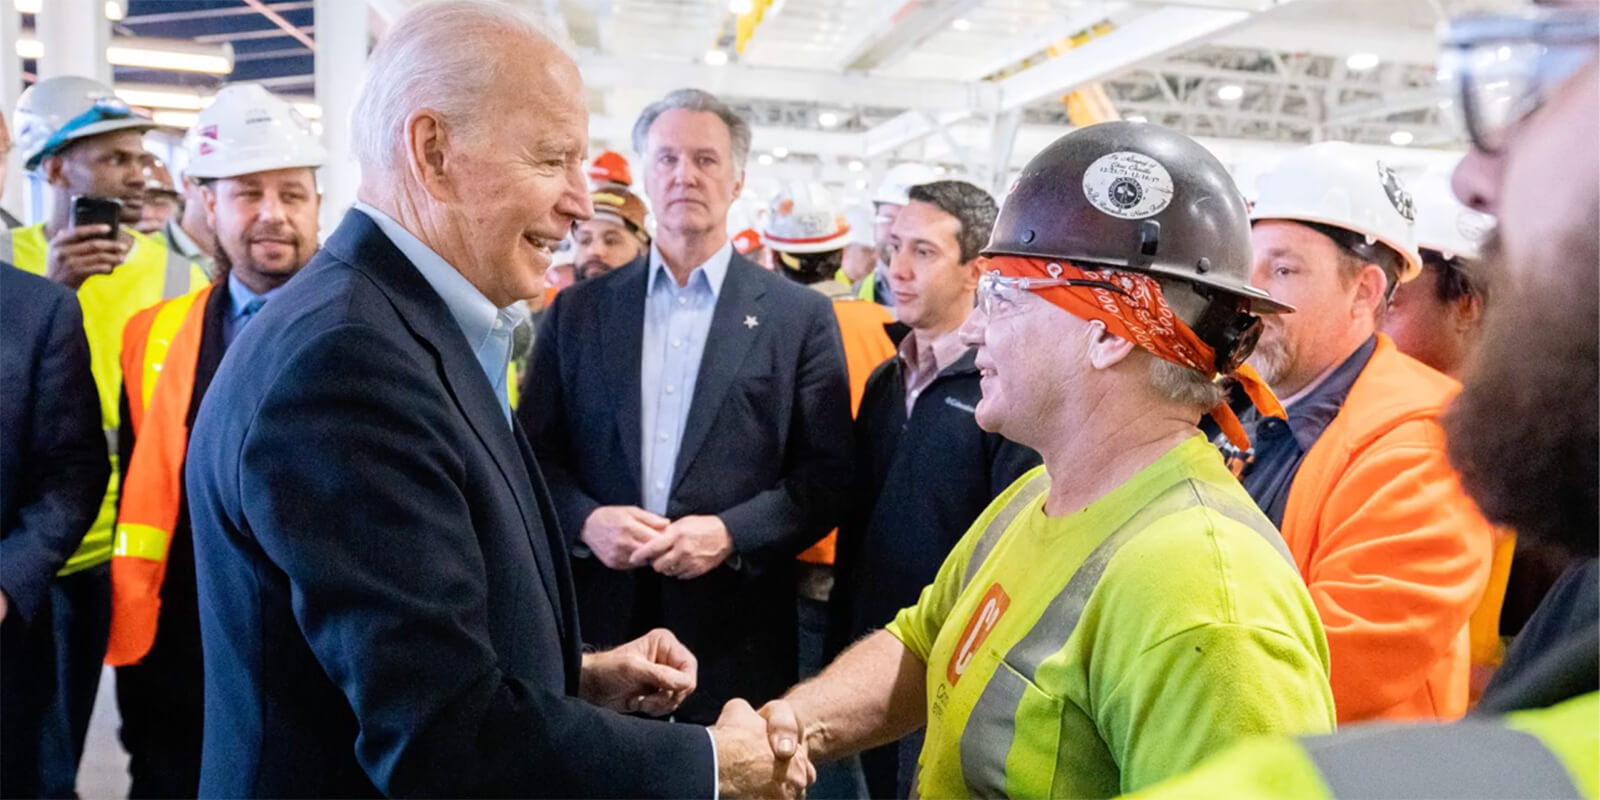 The choice for working people is Joe Biden